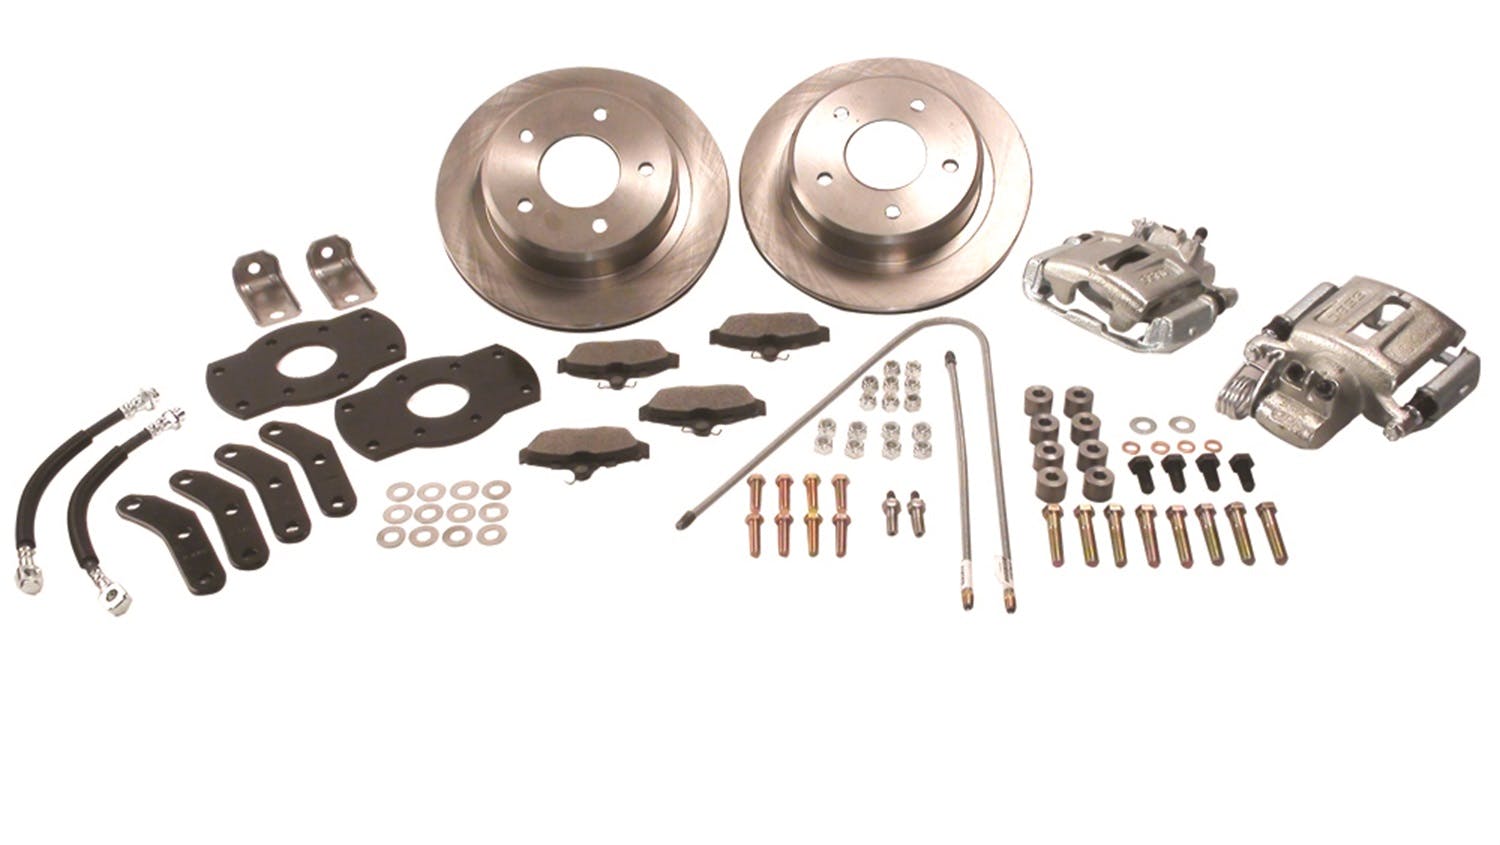 Stainless Steel Brakes A158 Rear drm/dsc conv kit 94-97 Ram 1500